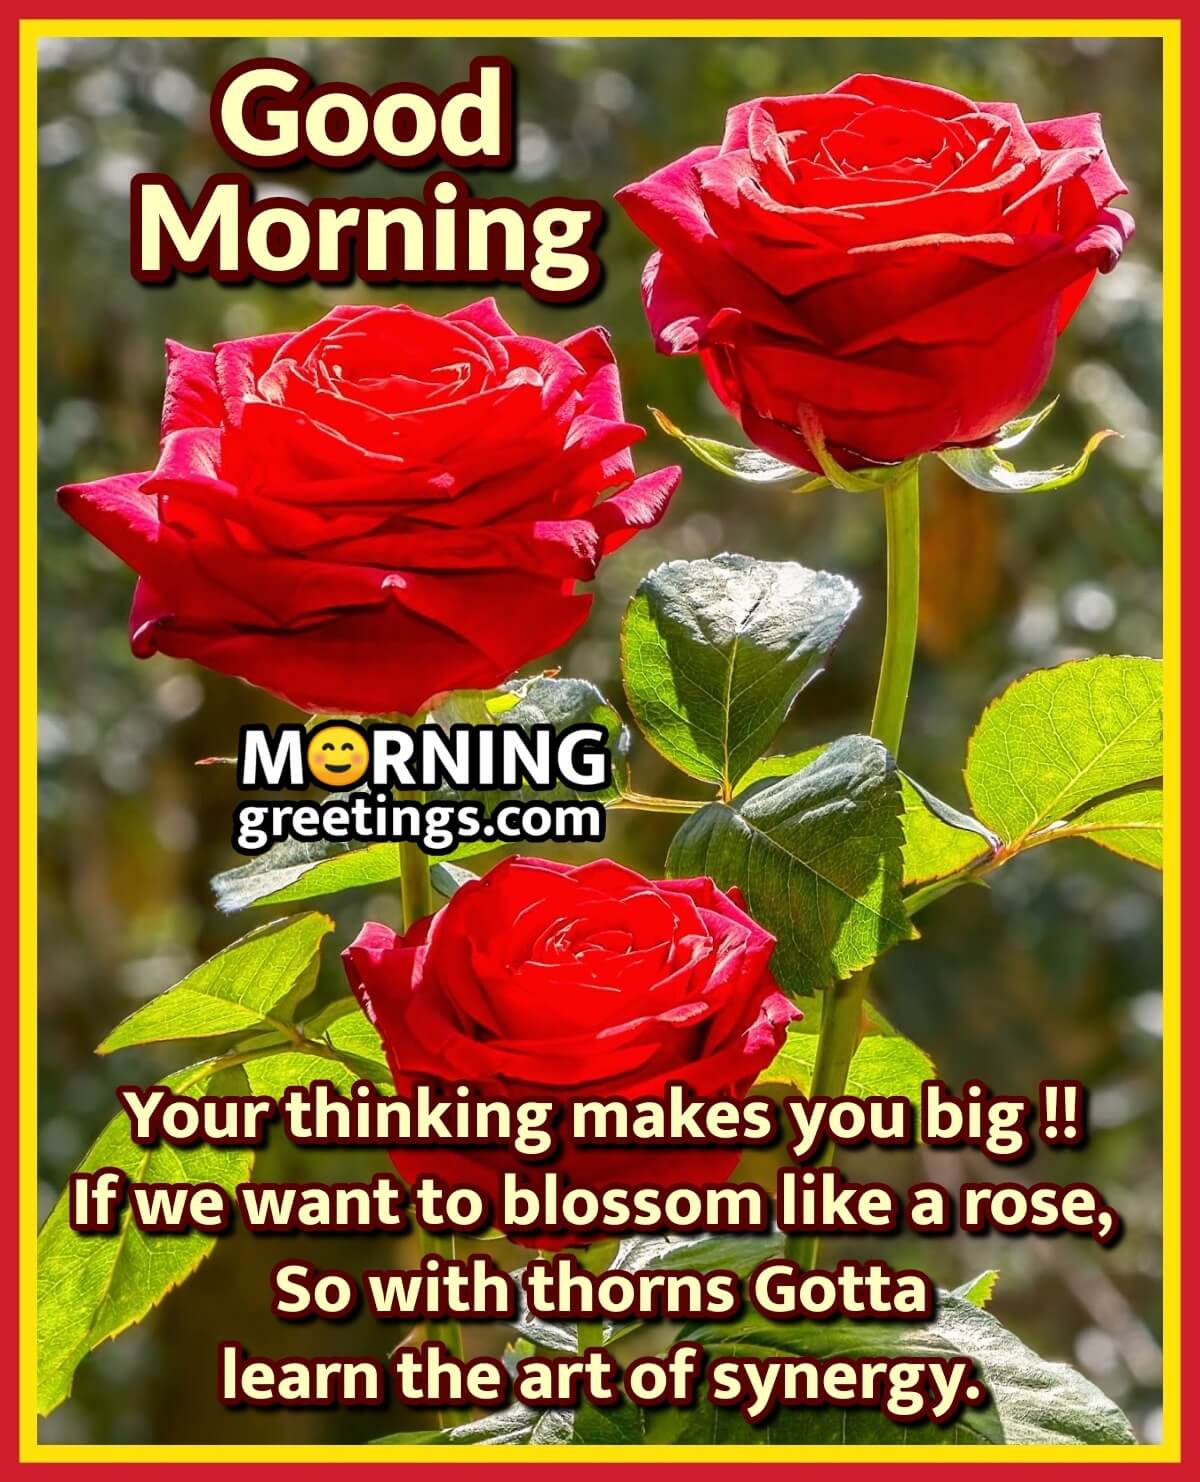 Good Morning Blossom Like A Rose